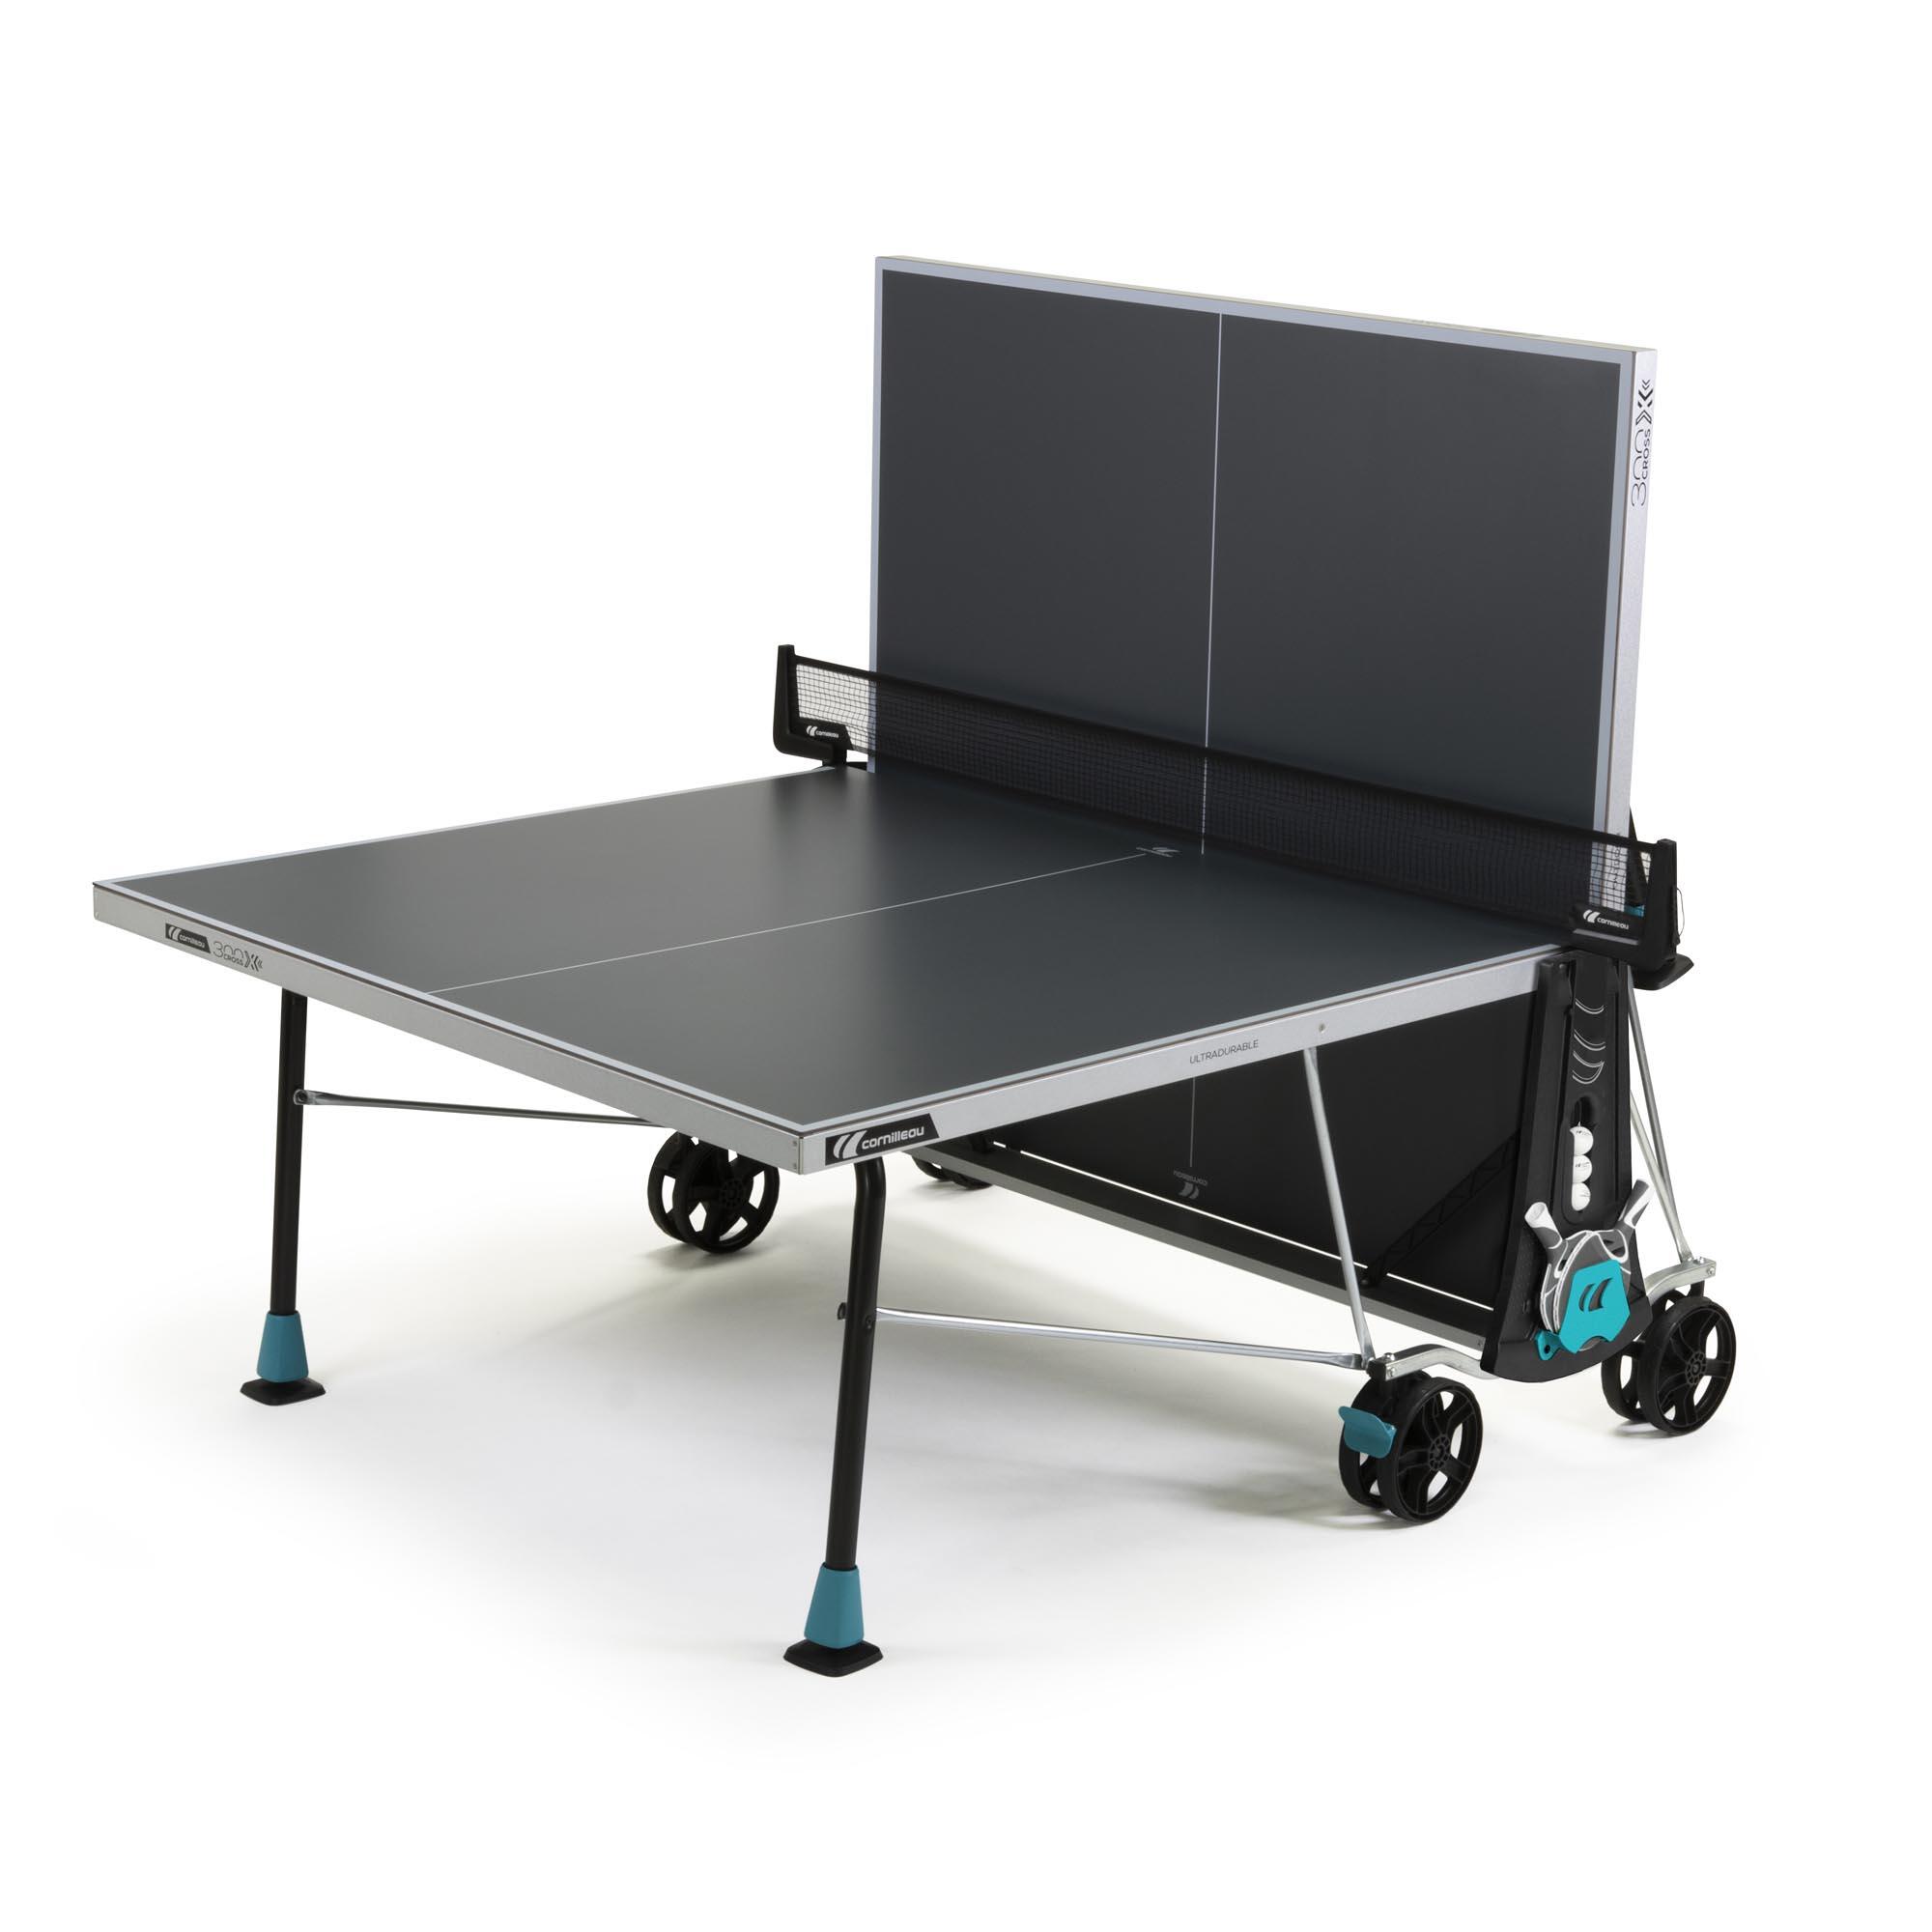 Outdoor Table Tennis Table 300X - Grey 3/20